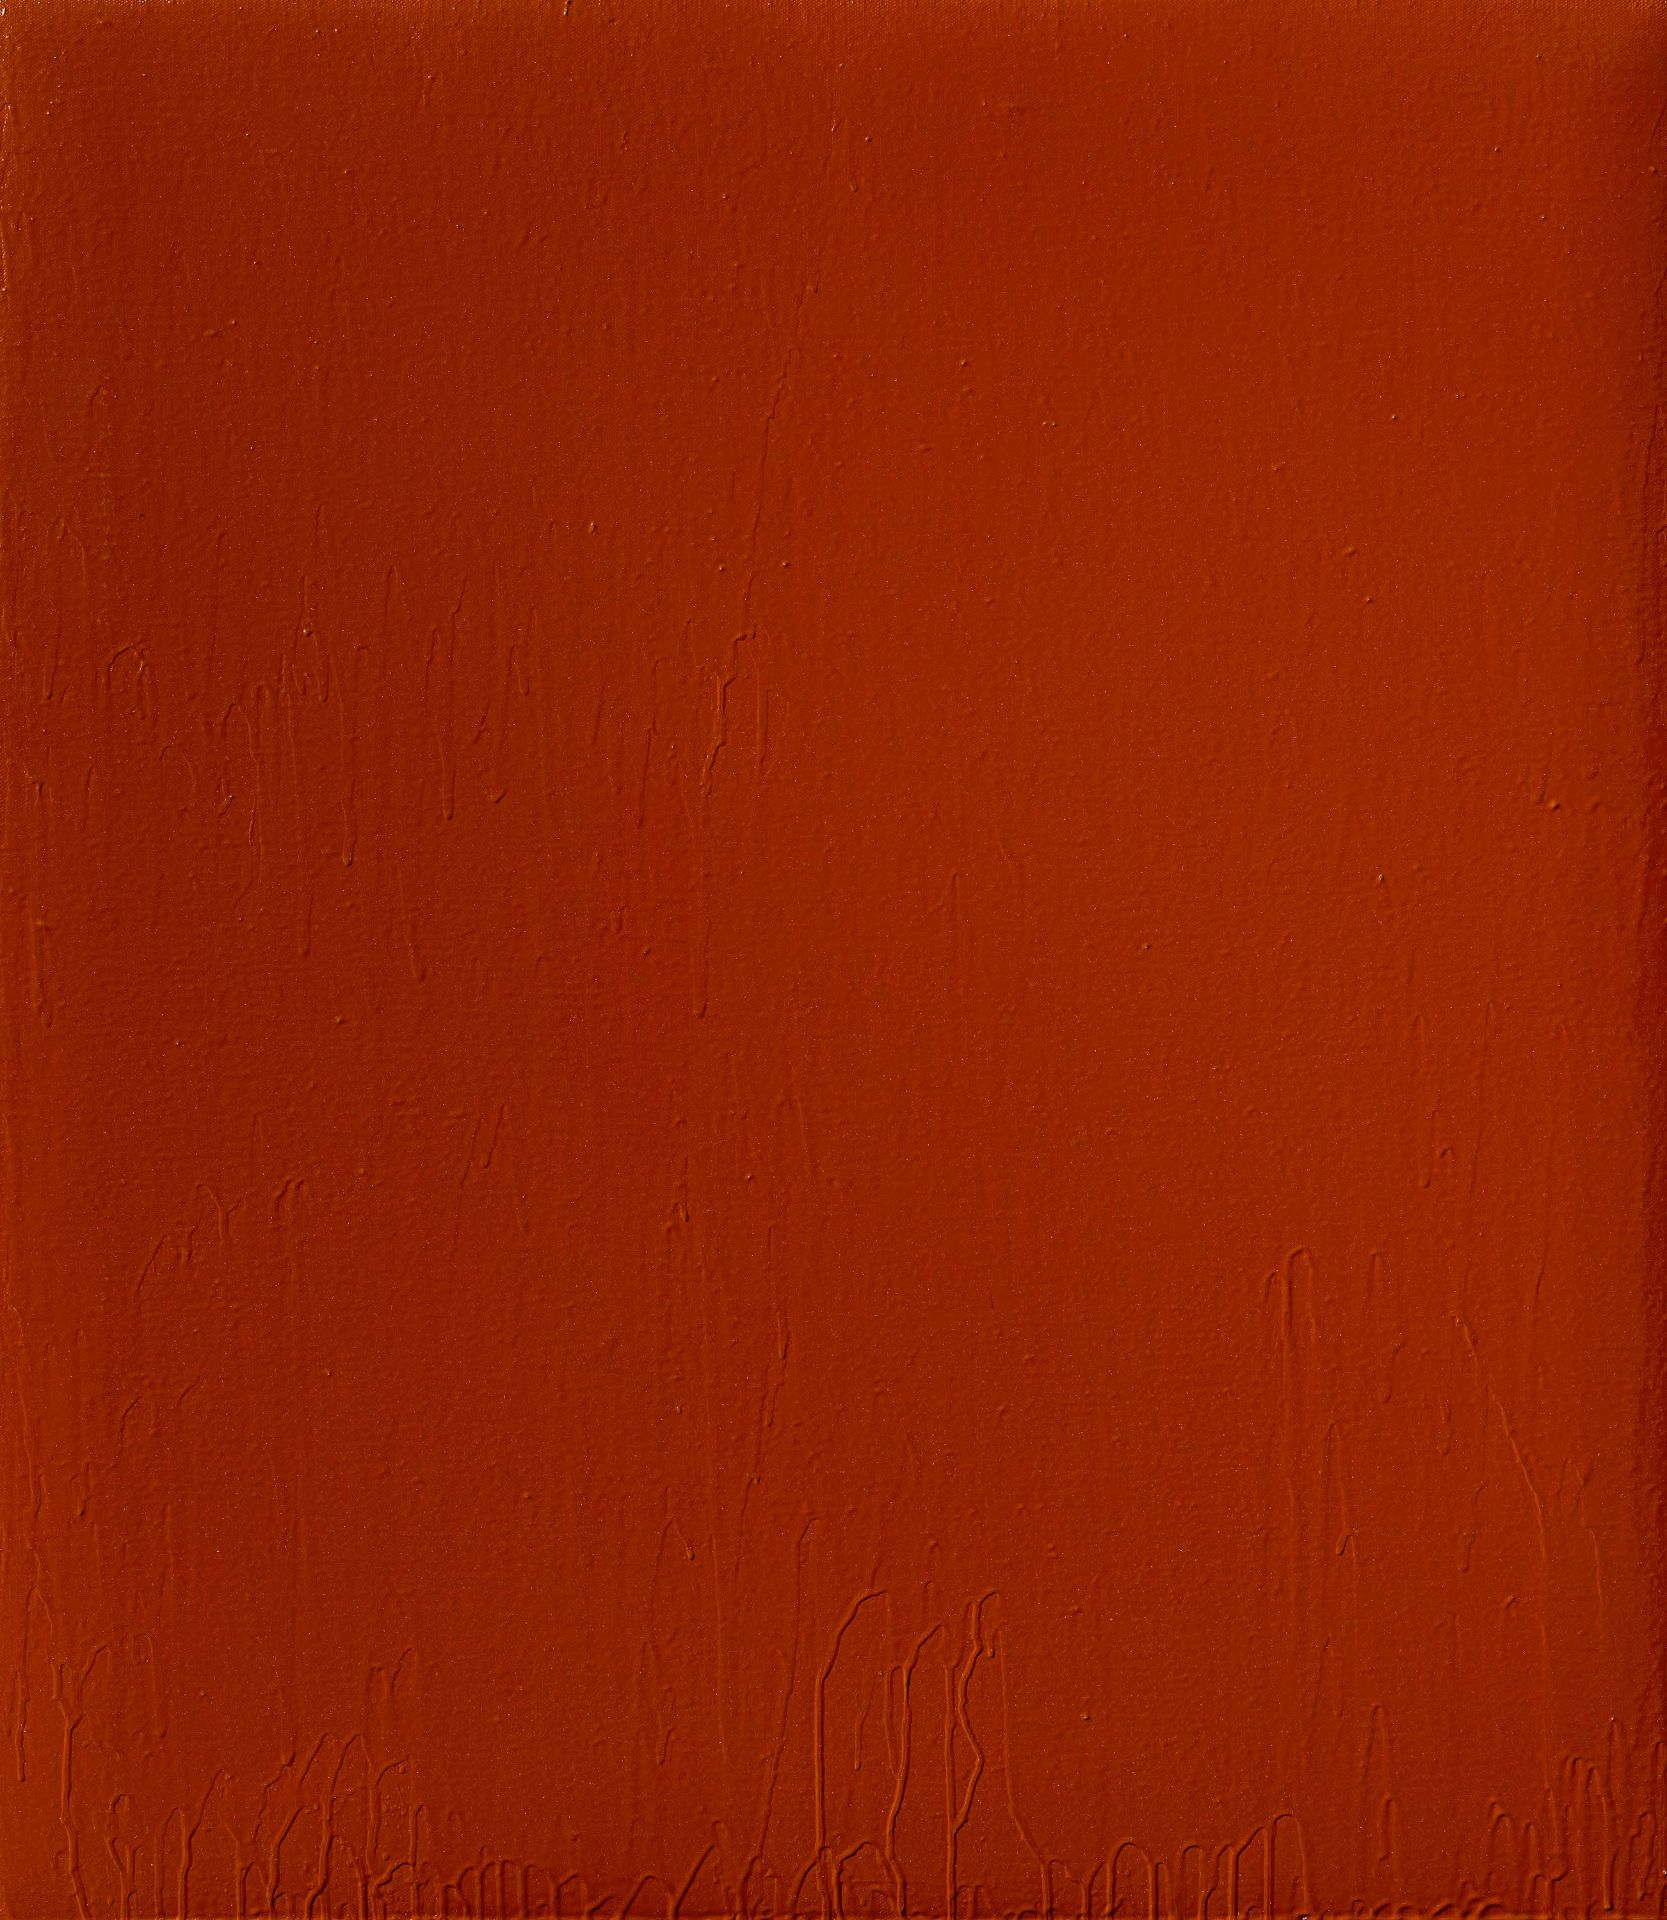 Joseph Marioni: "Painting #11-79"